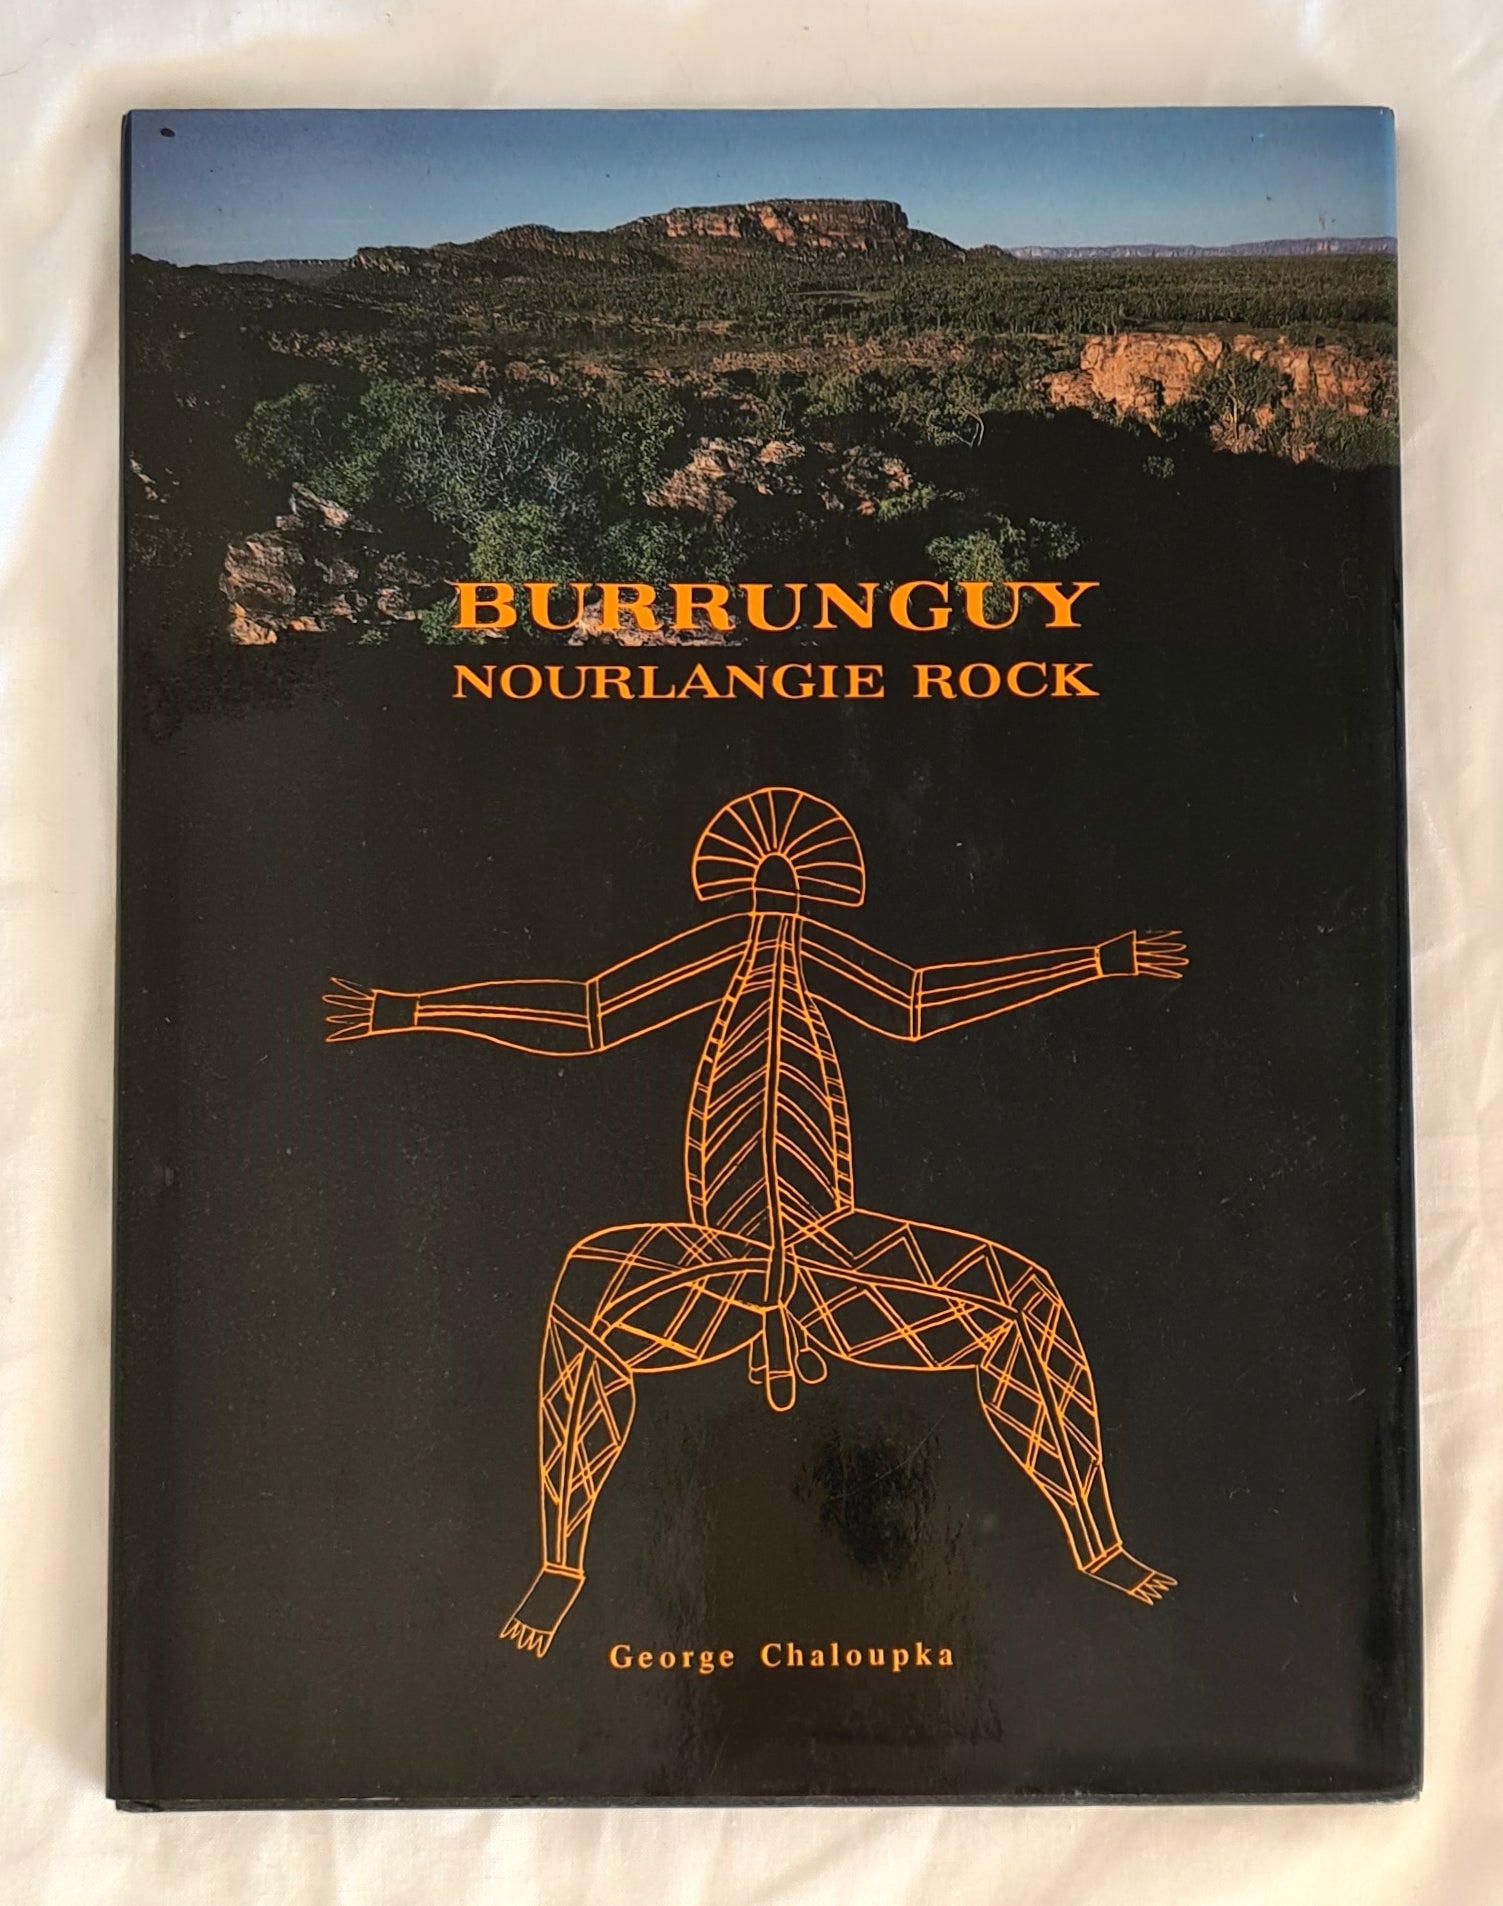 Burrunguy  Nourlangie Rock  by George Chaloupka